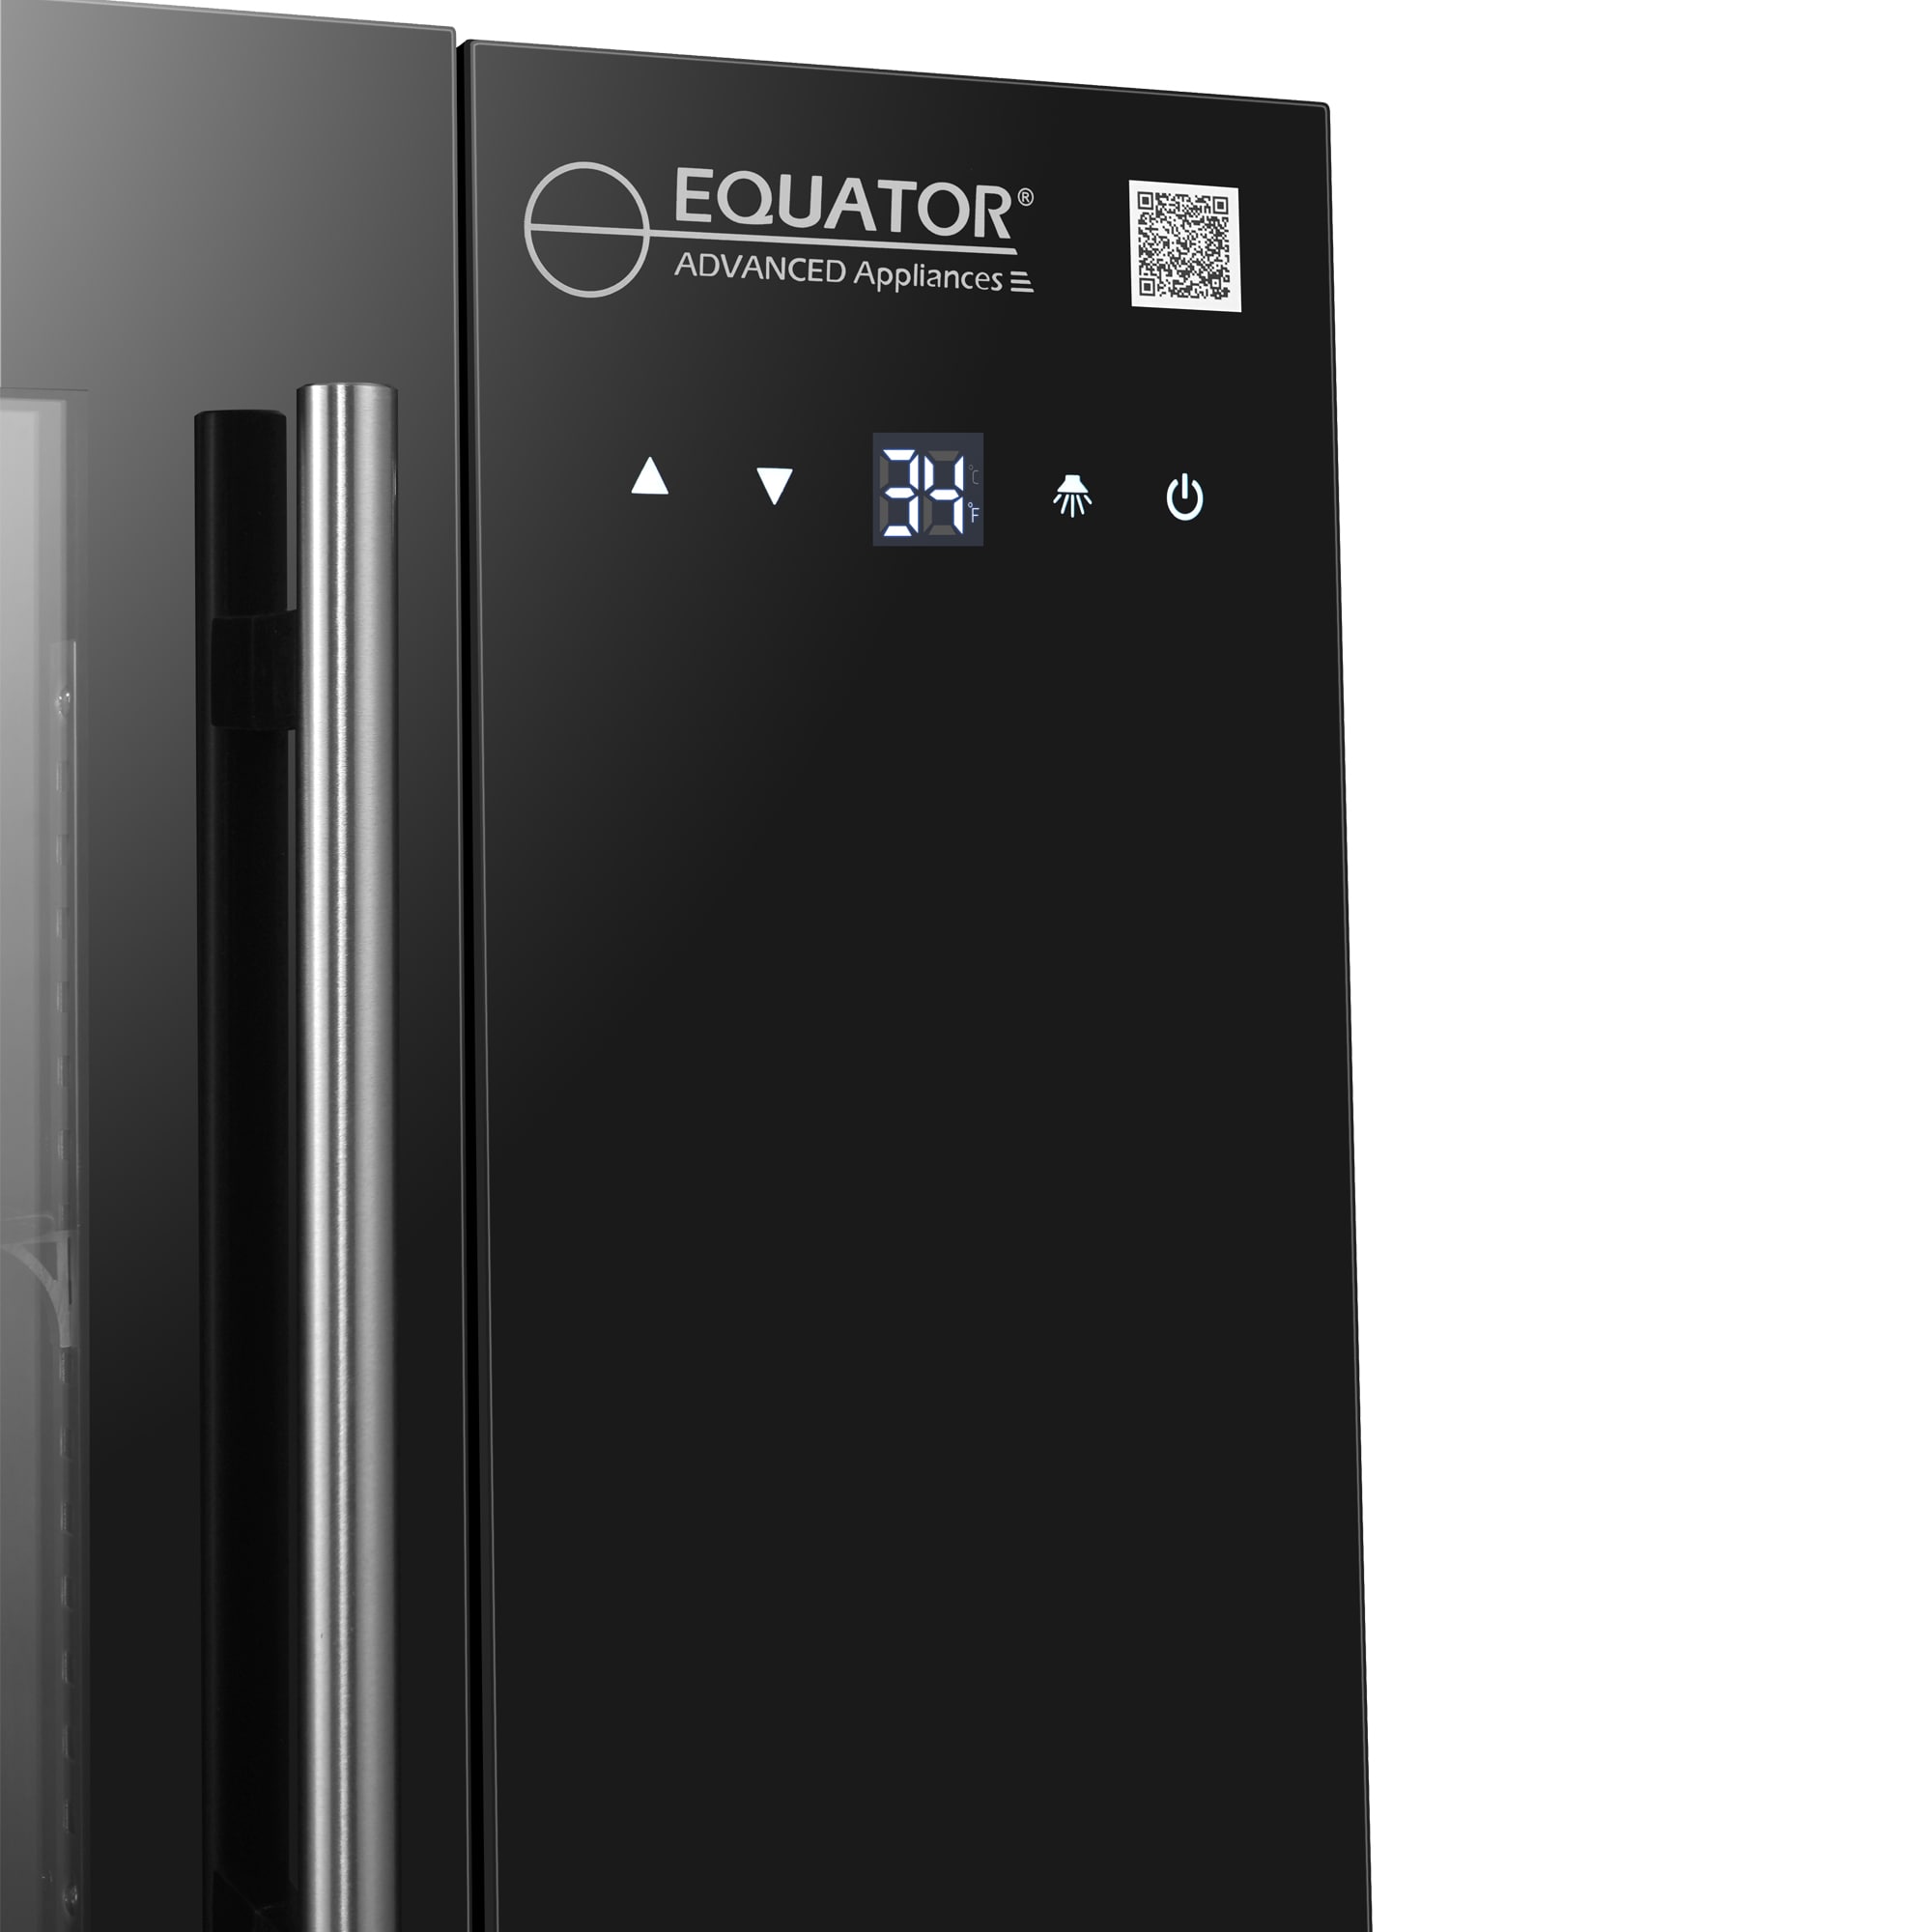 Equator 1.4 Cu. ft Can Refrigerator in Black - BR 140